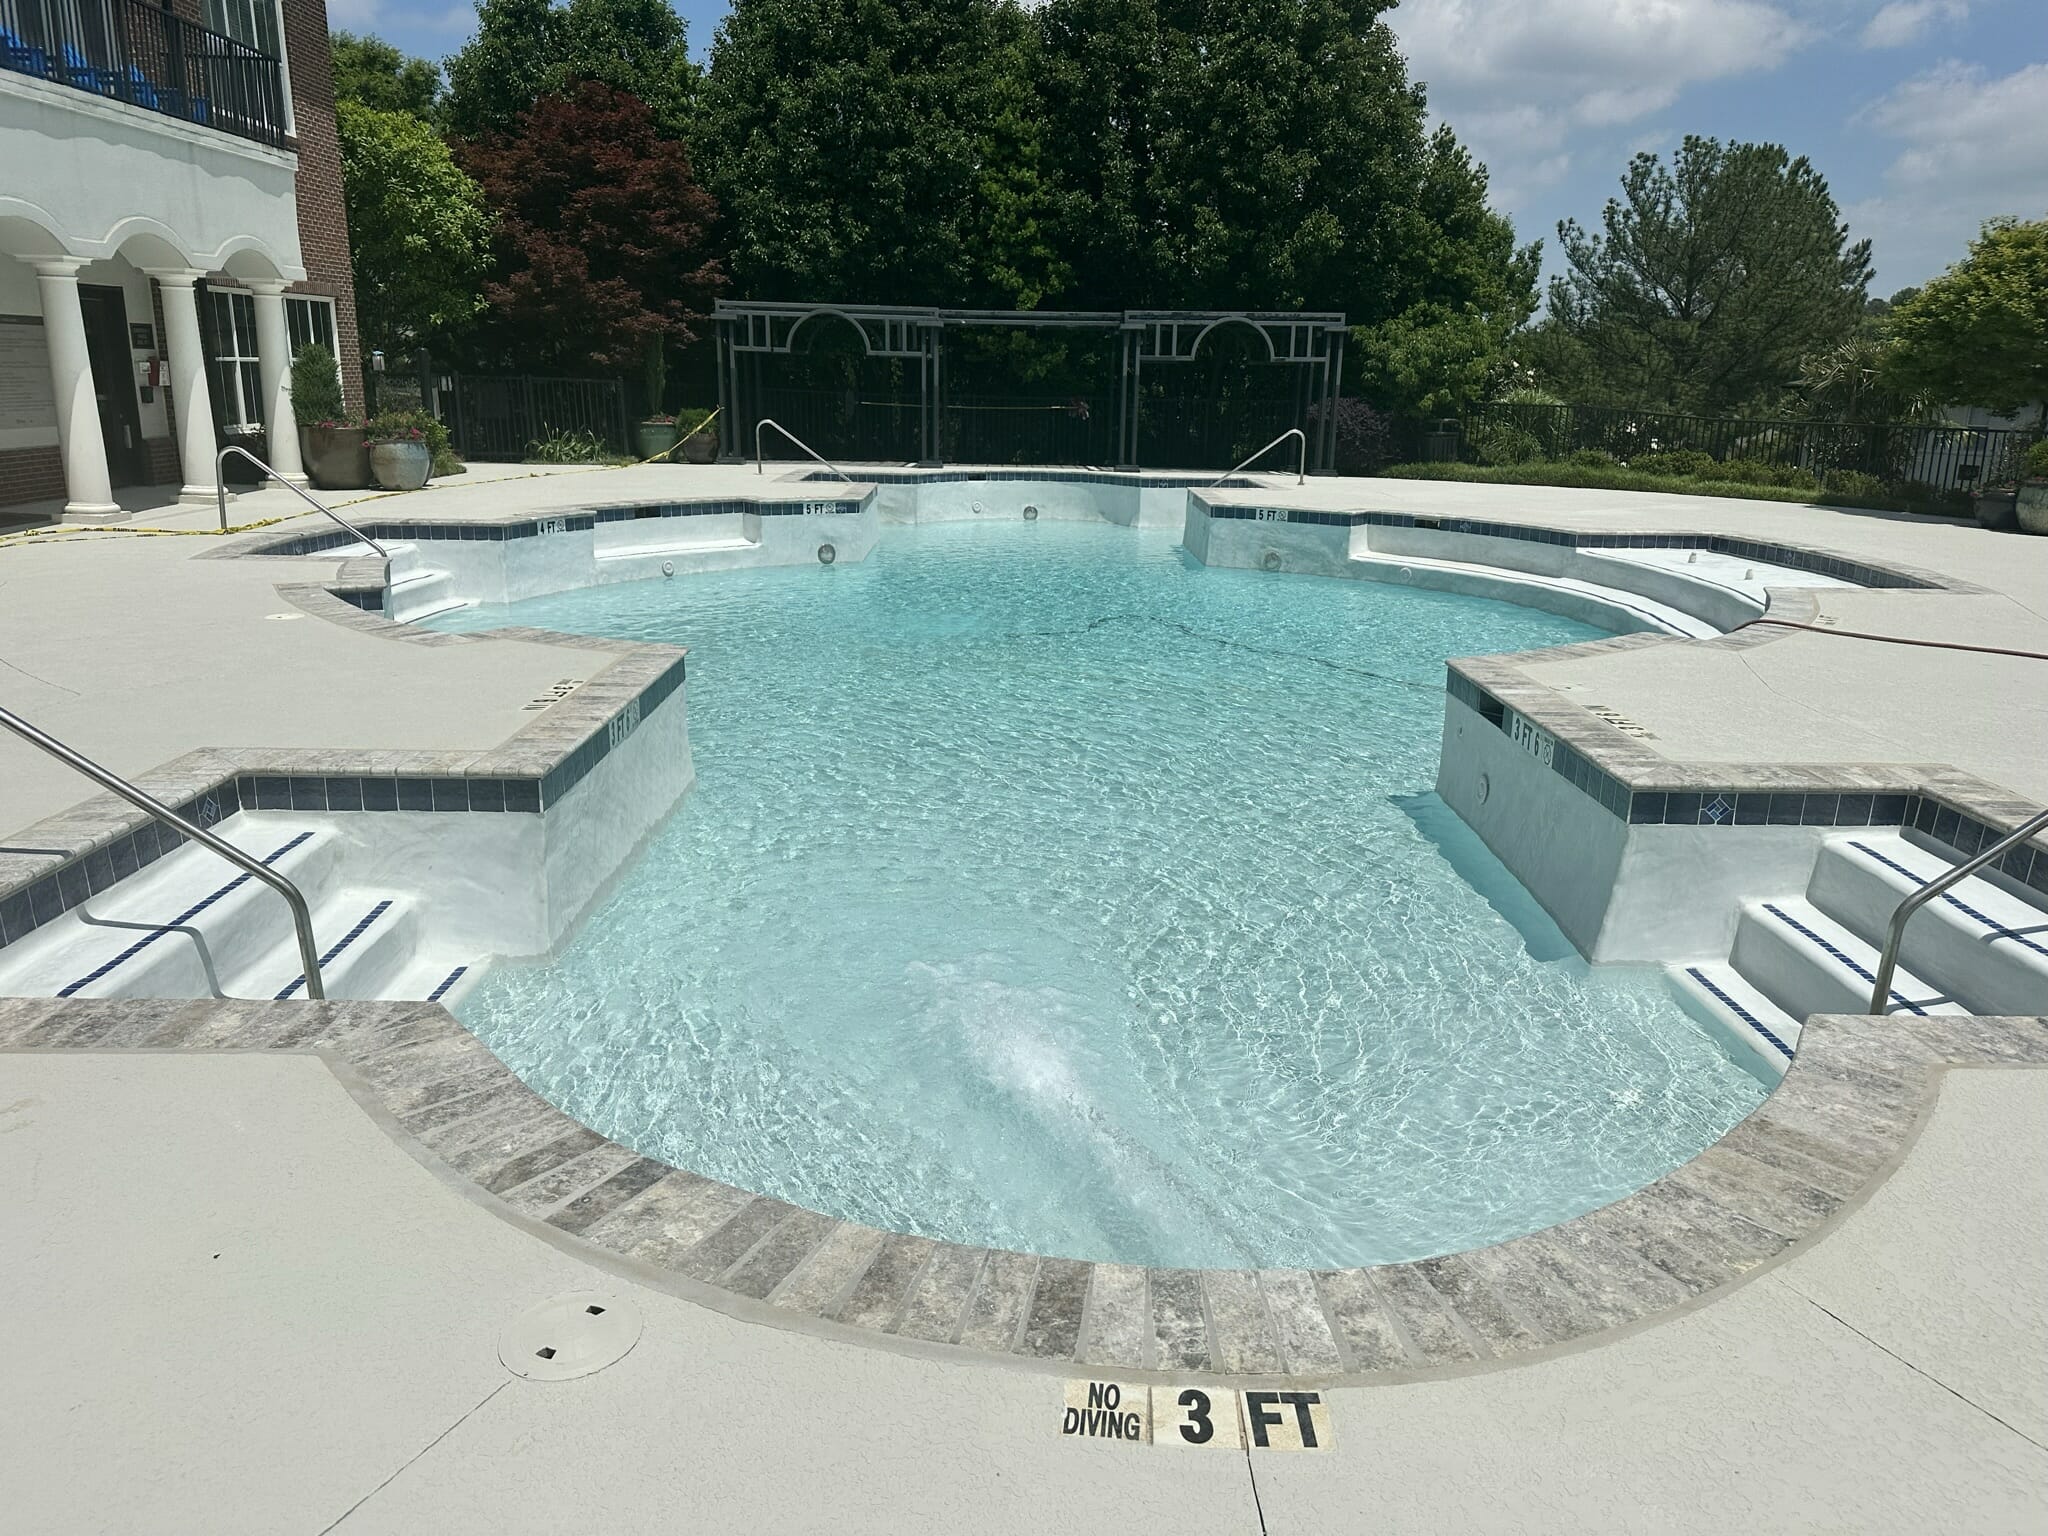 Pool Maintenance Residential Pool Services in Atlanta"